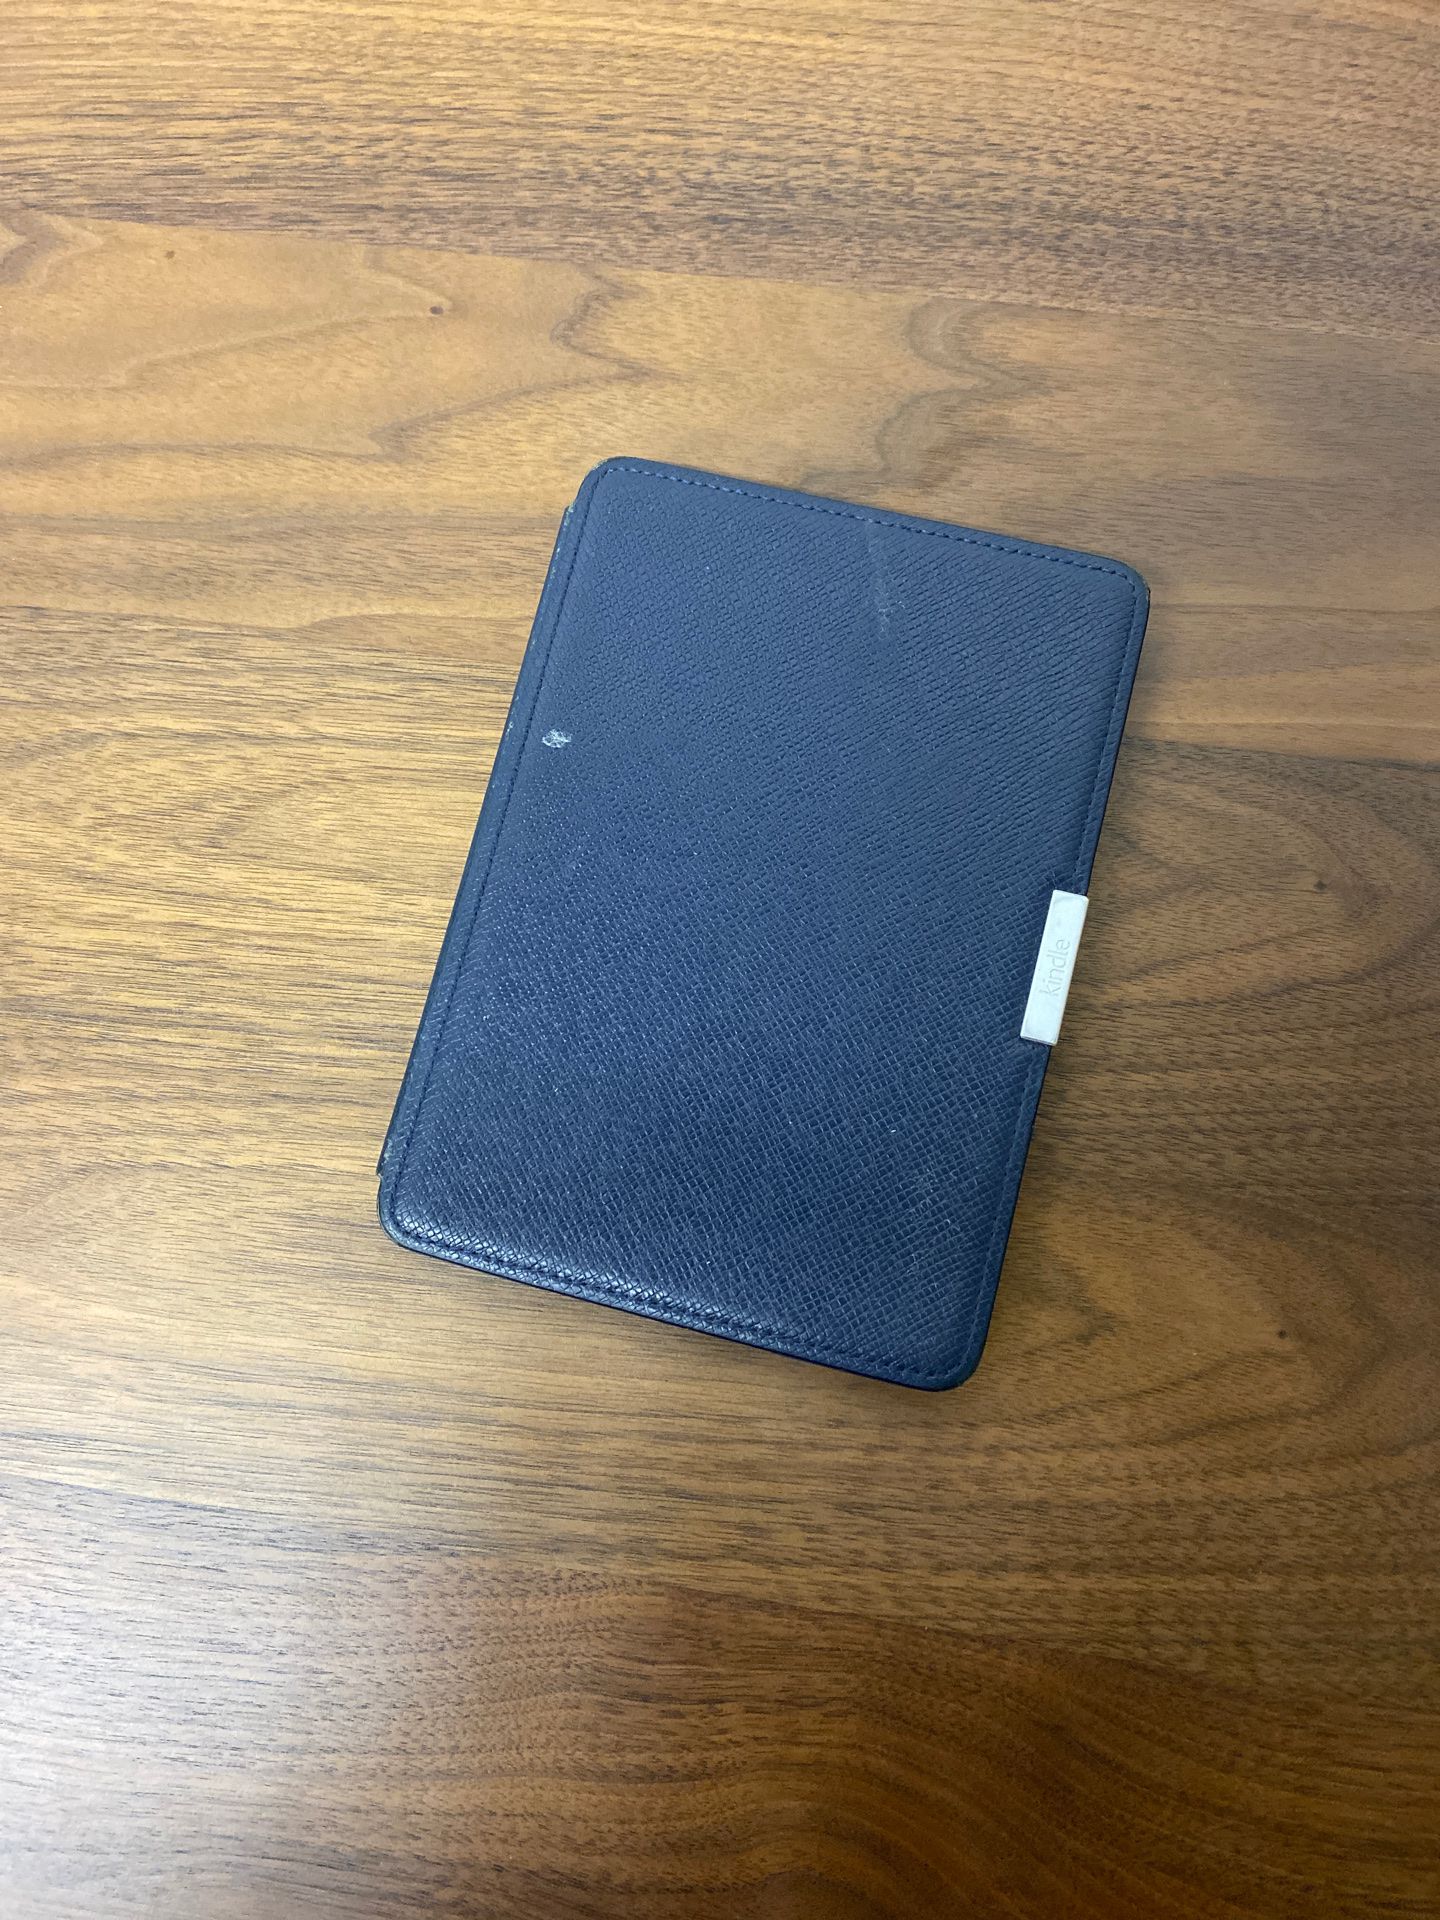 Amazon Kindle Paperwhite E-reader Case (2016, 7th Generation), Blue